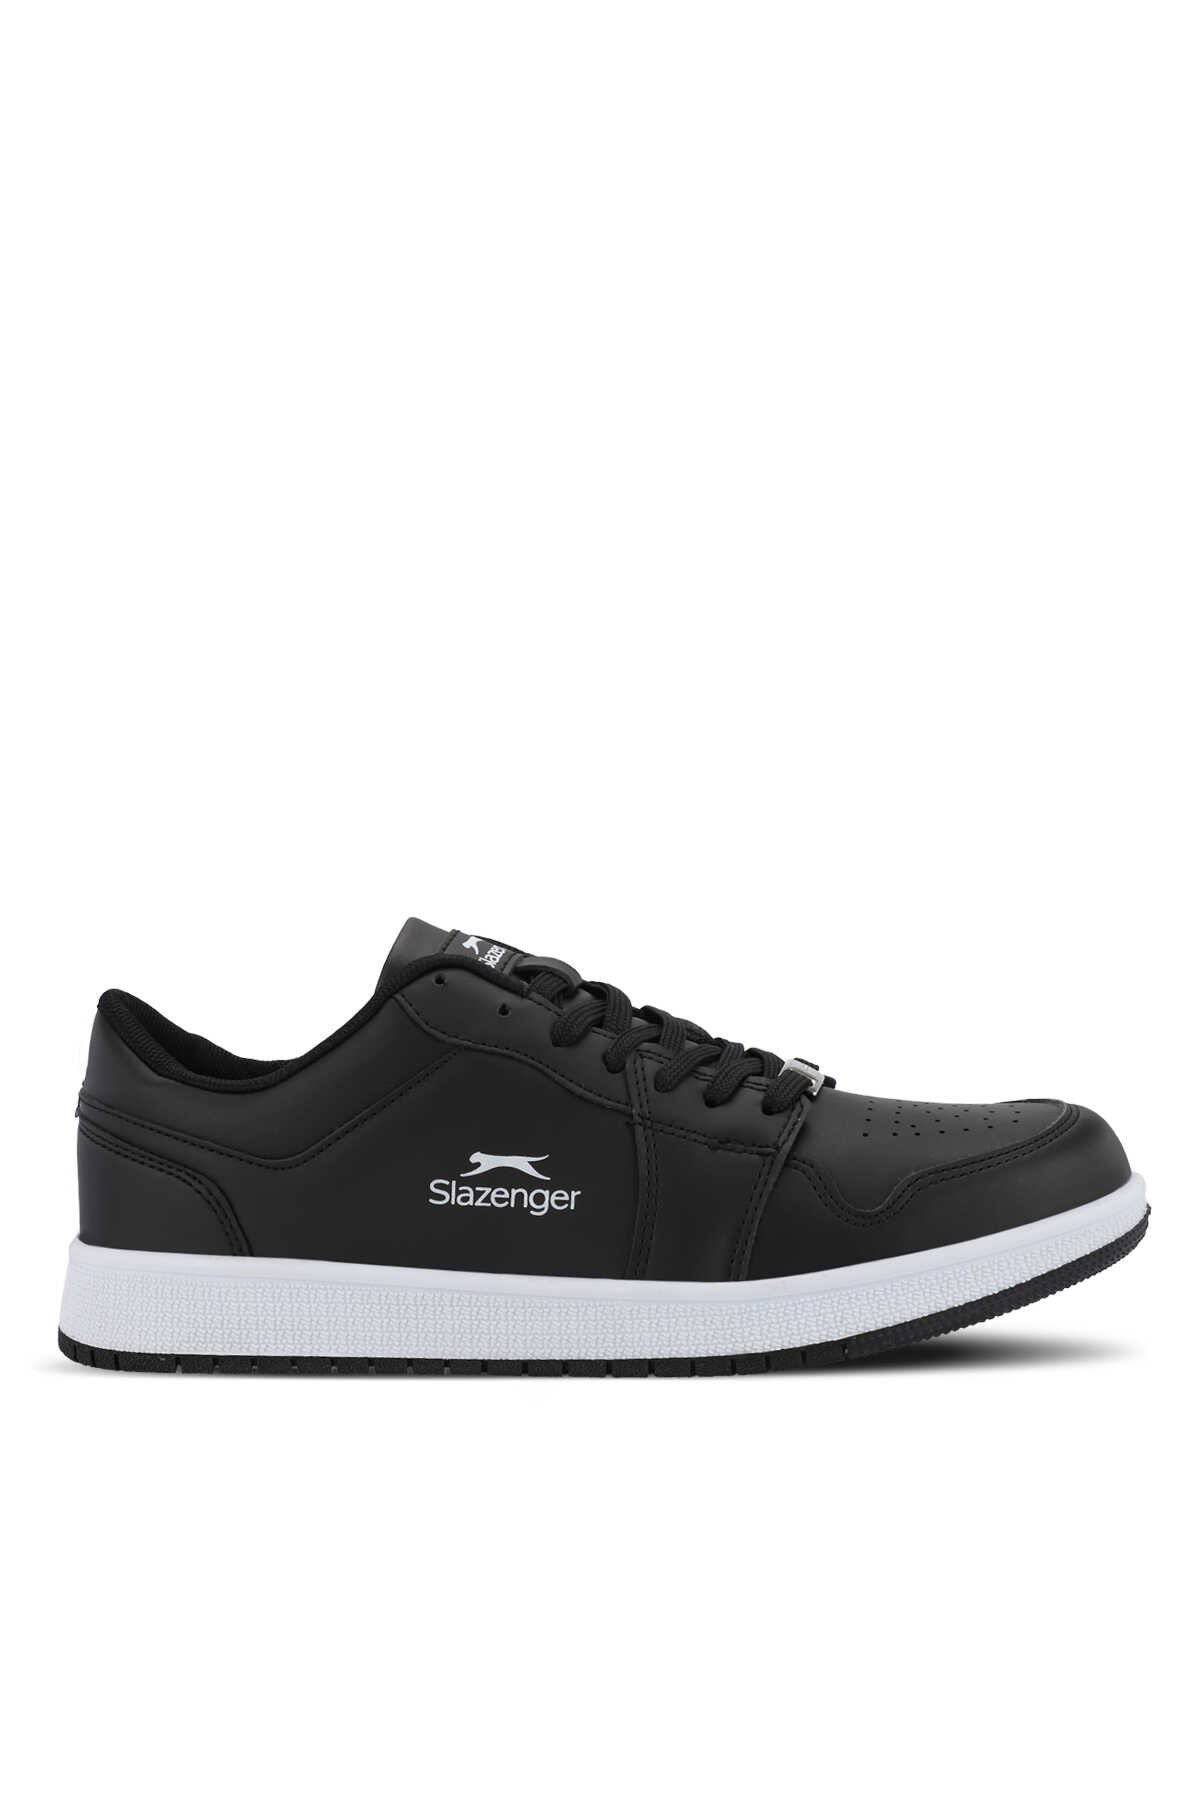 Slazenger - Slazenger PRINCE I Erkek Sneaker Ayakkabı Siyah